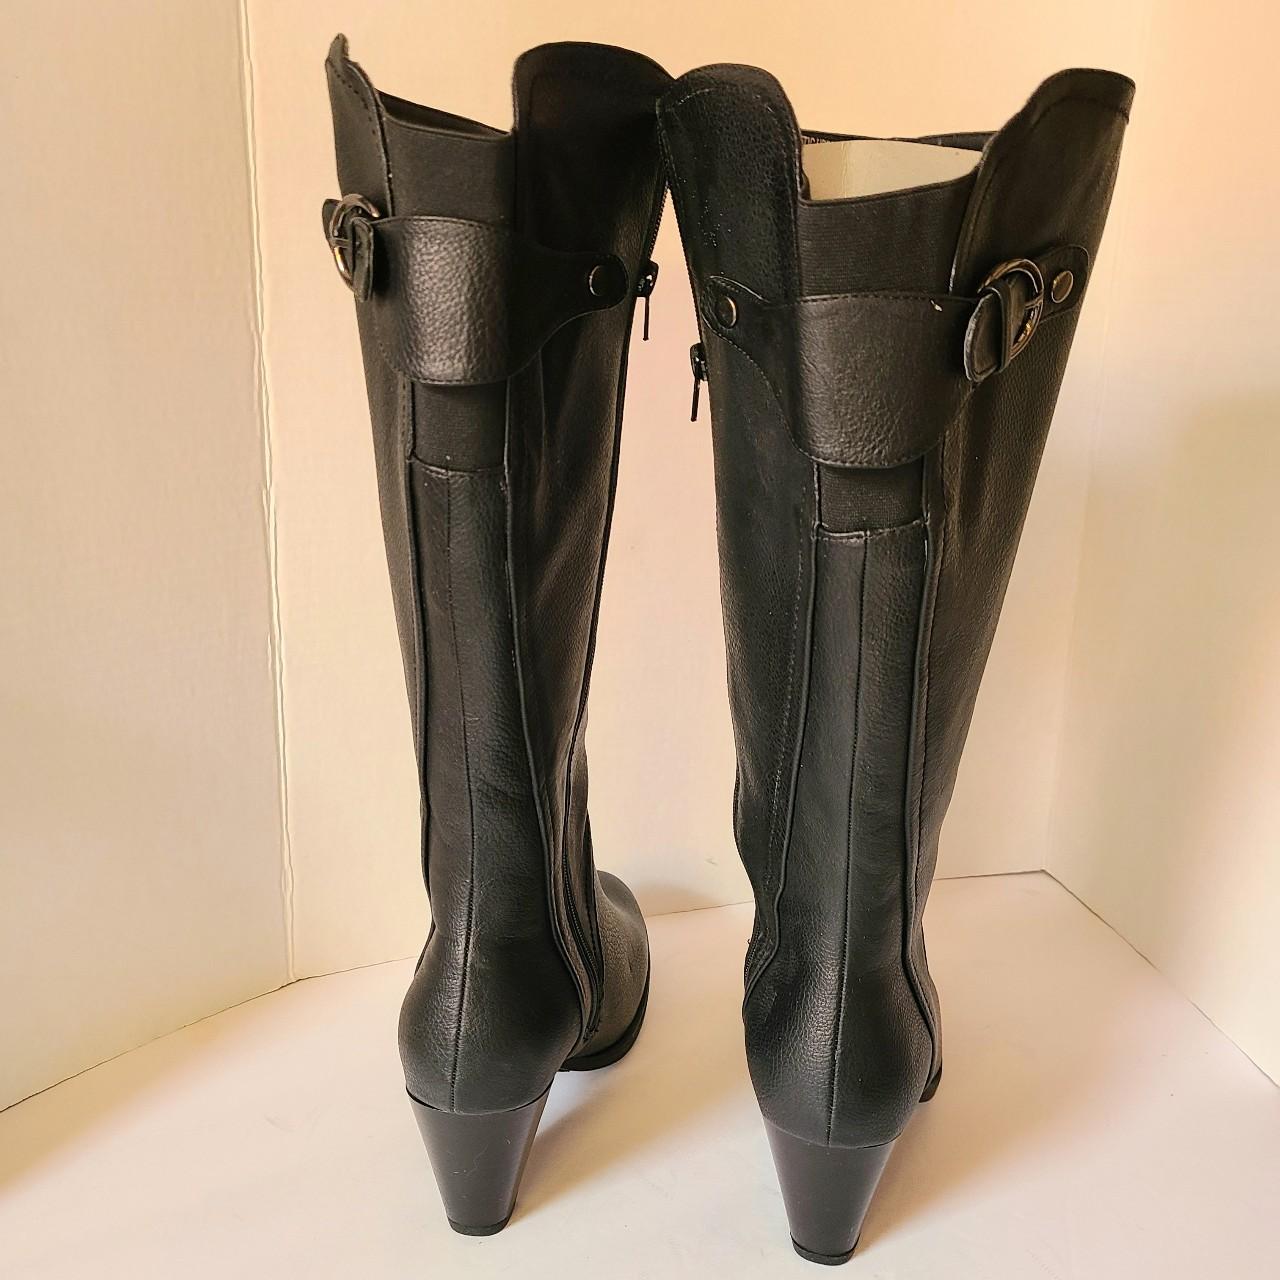 Insulated knee High Boots Man Made Materials Size 11... - Depop